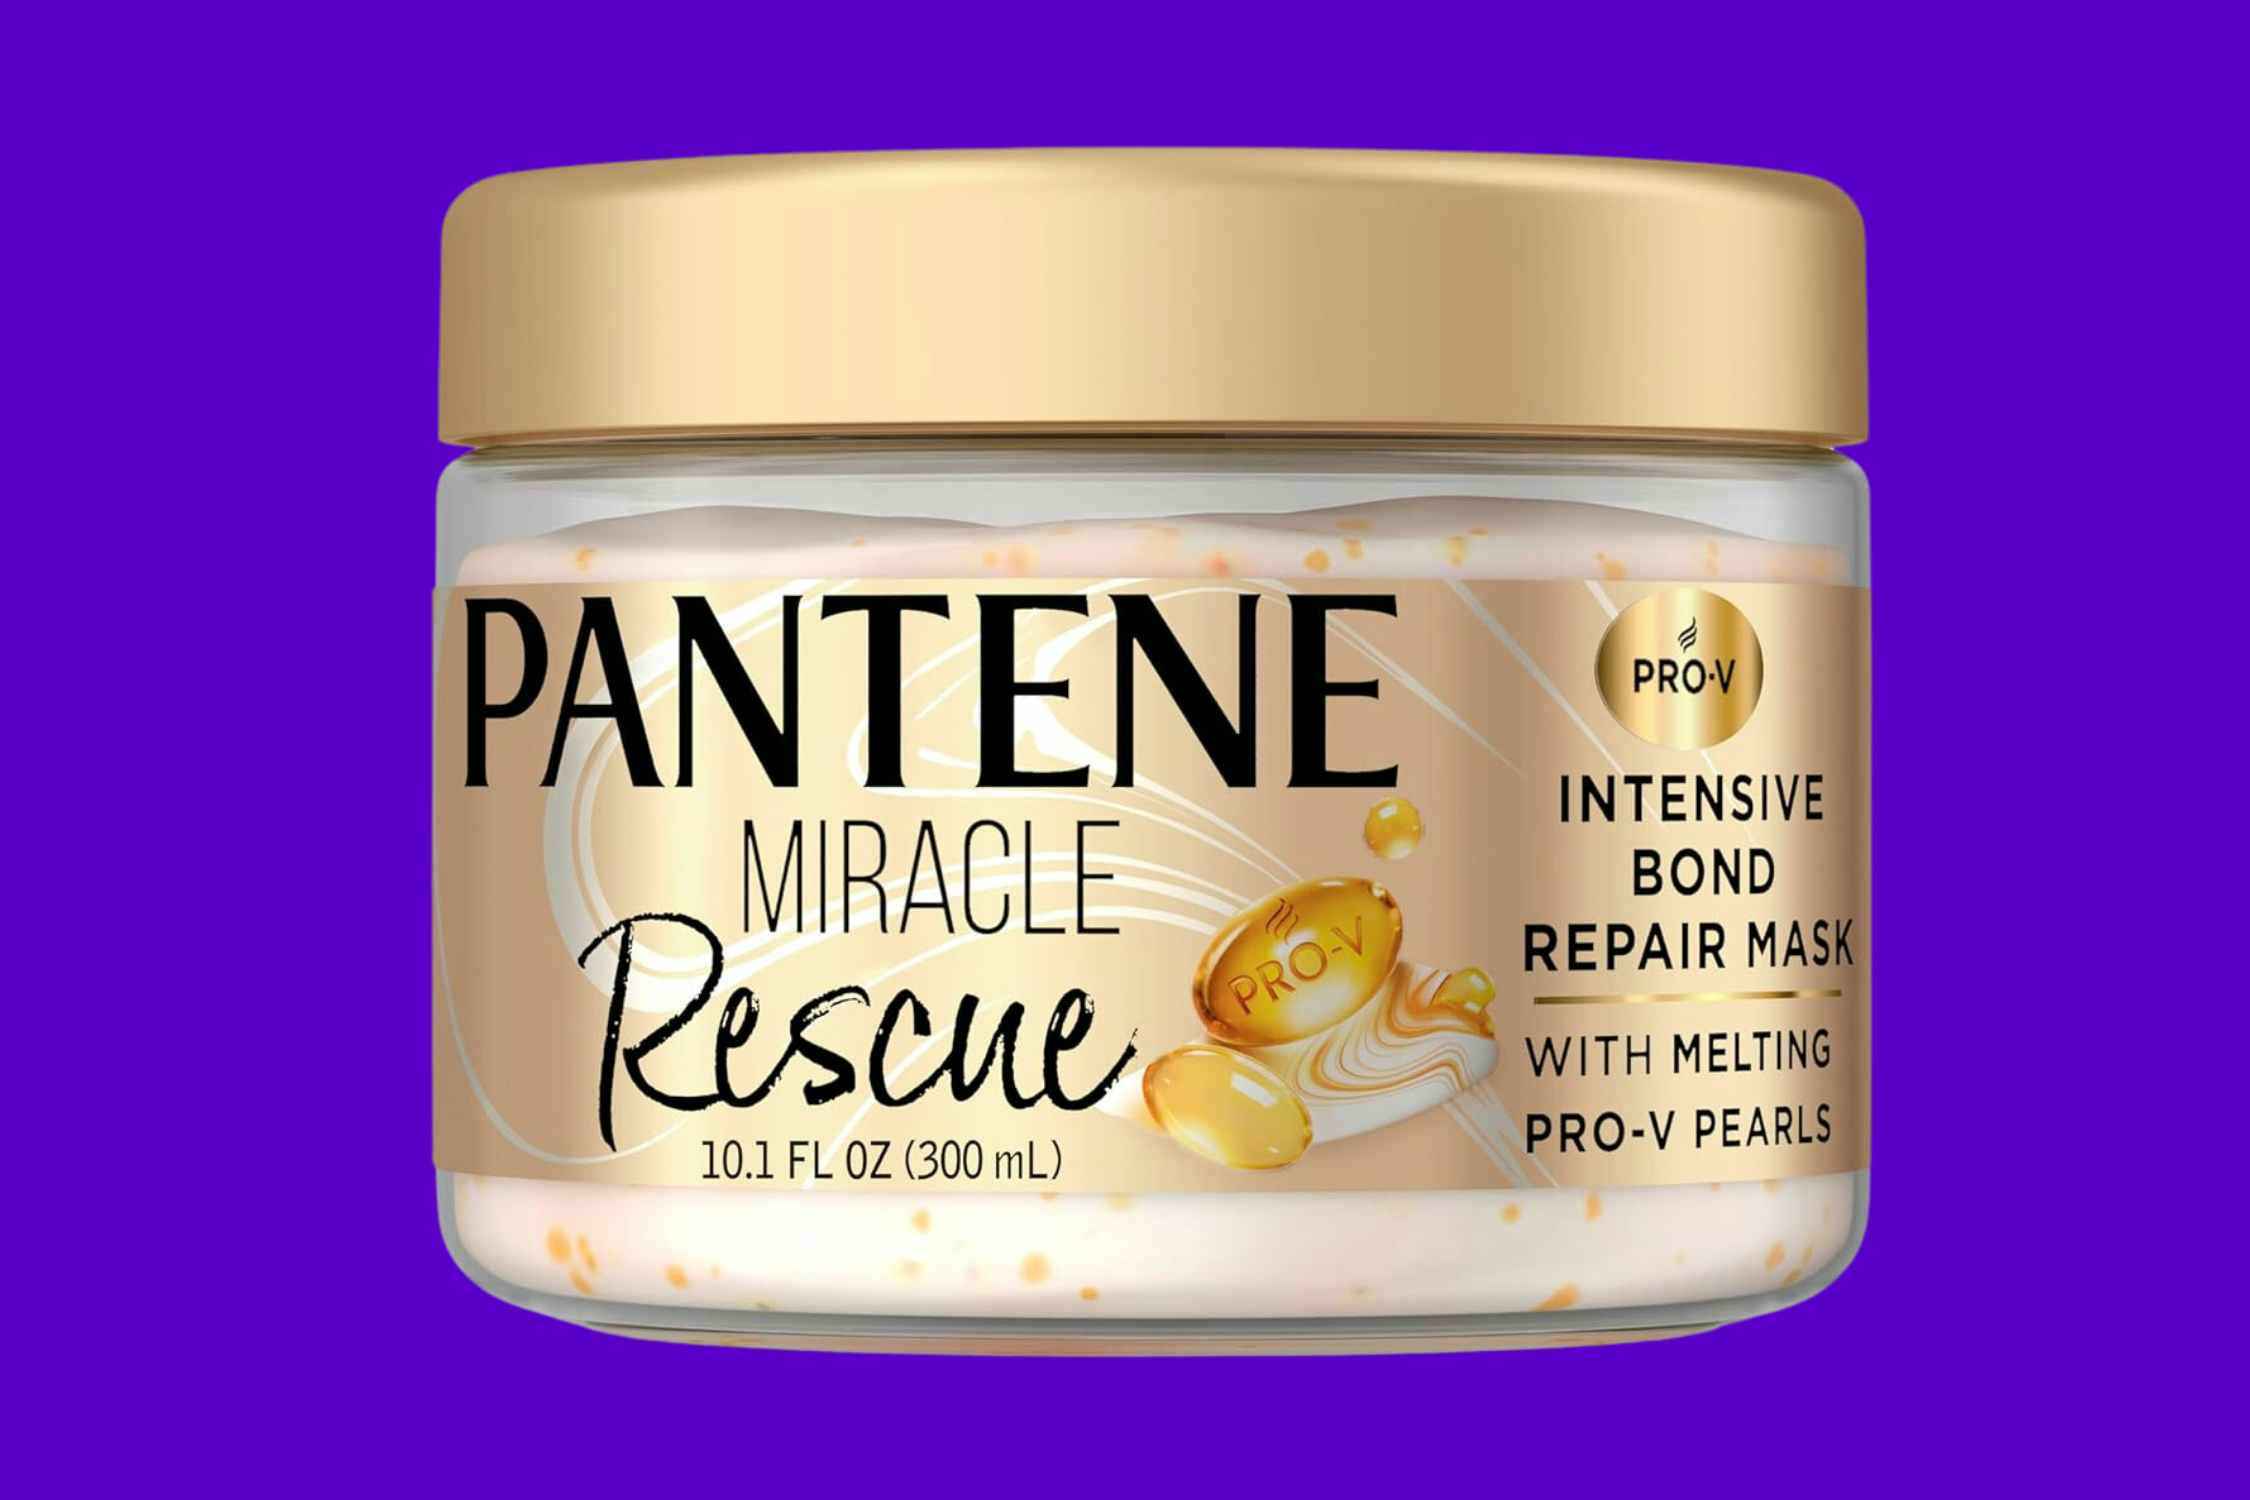 Pantene Miracle Rescue Hair Mask, as Low as $6.77 on Amazon (Reg. $13)